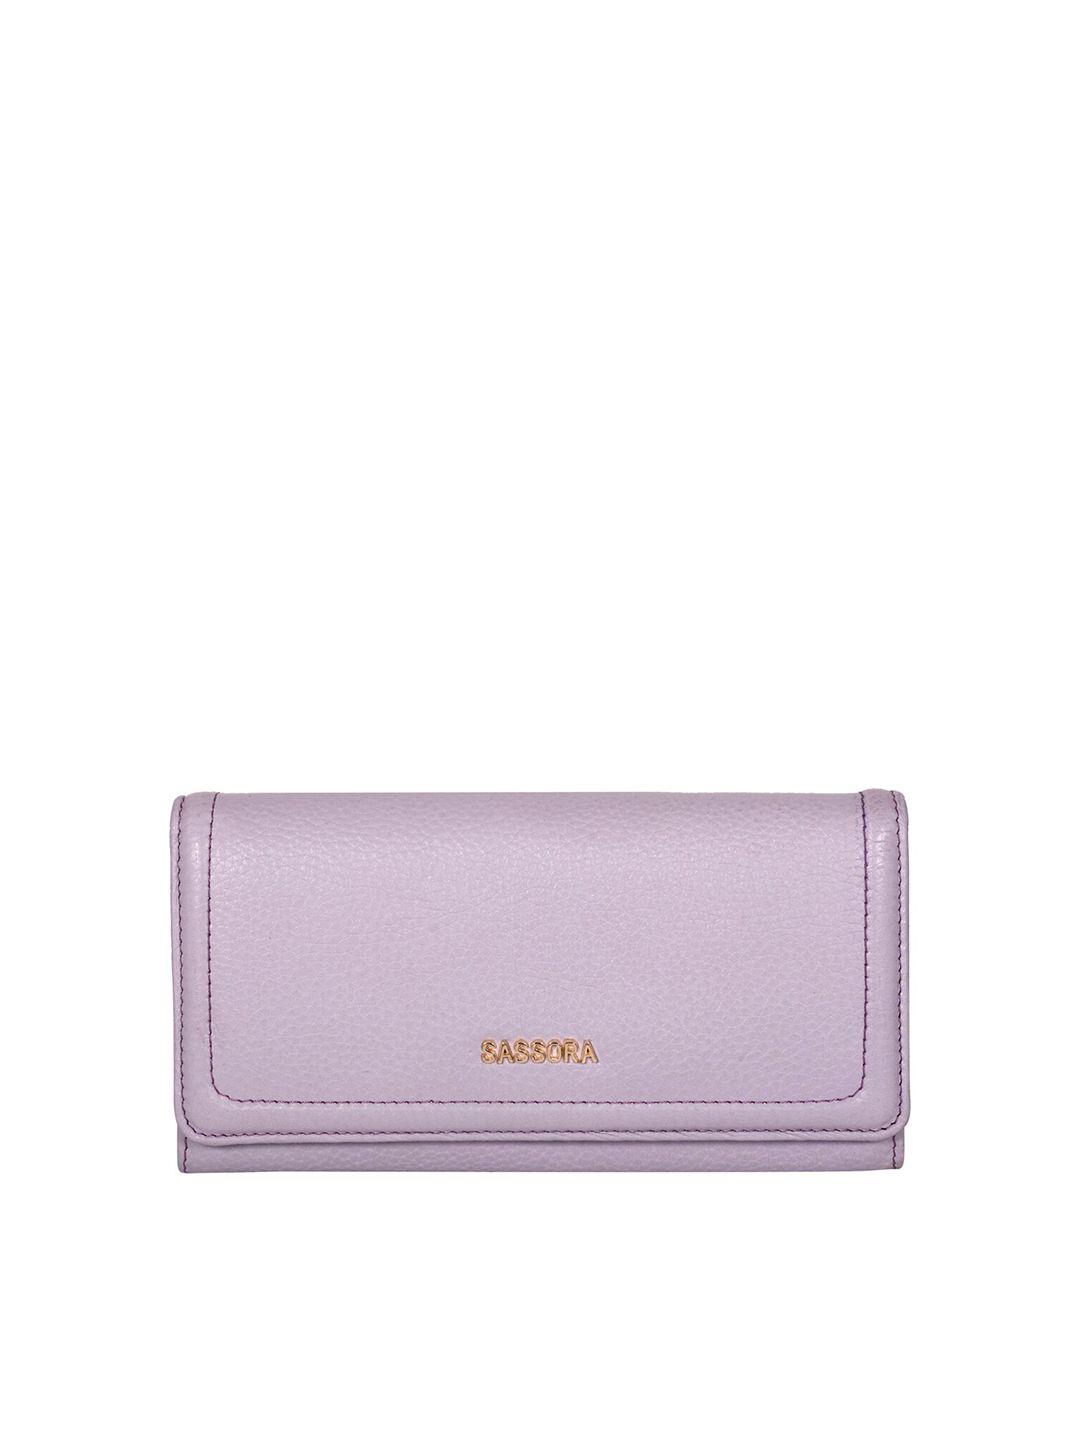 sassora women violet textured leather two fold wallet